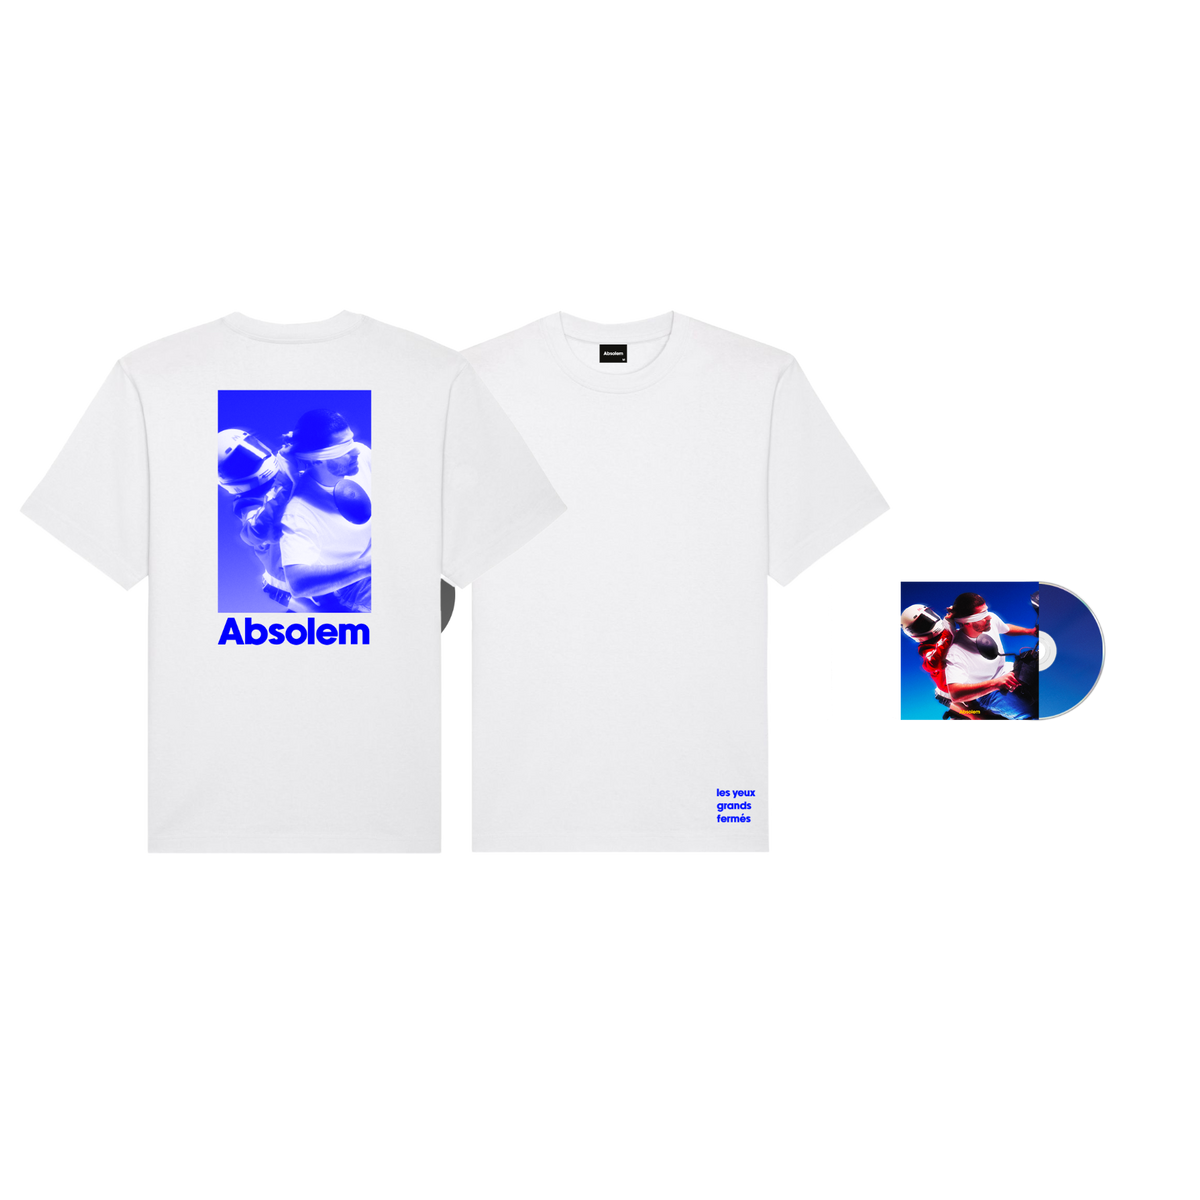 PACK CD "Les yeux grand fermés" + T-Shirt Blanc